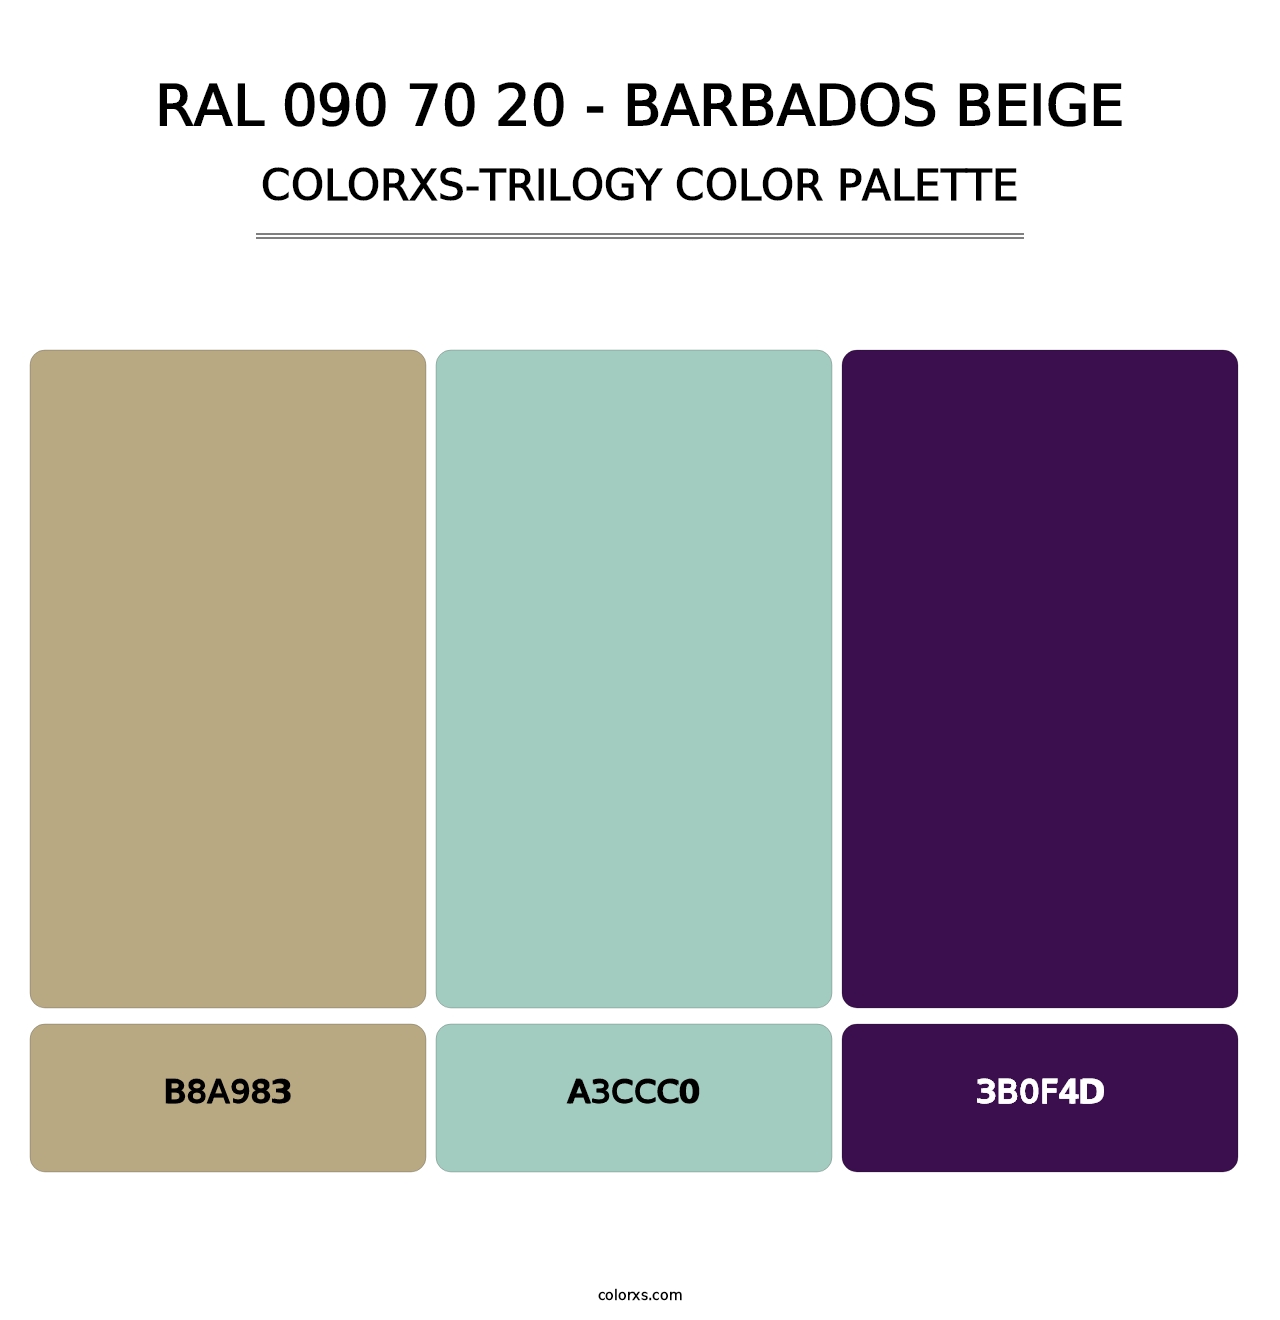 RAL 090 70 20 - Barbados Beige - Colorxs Trilogy Palette